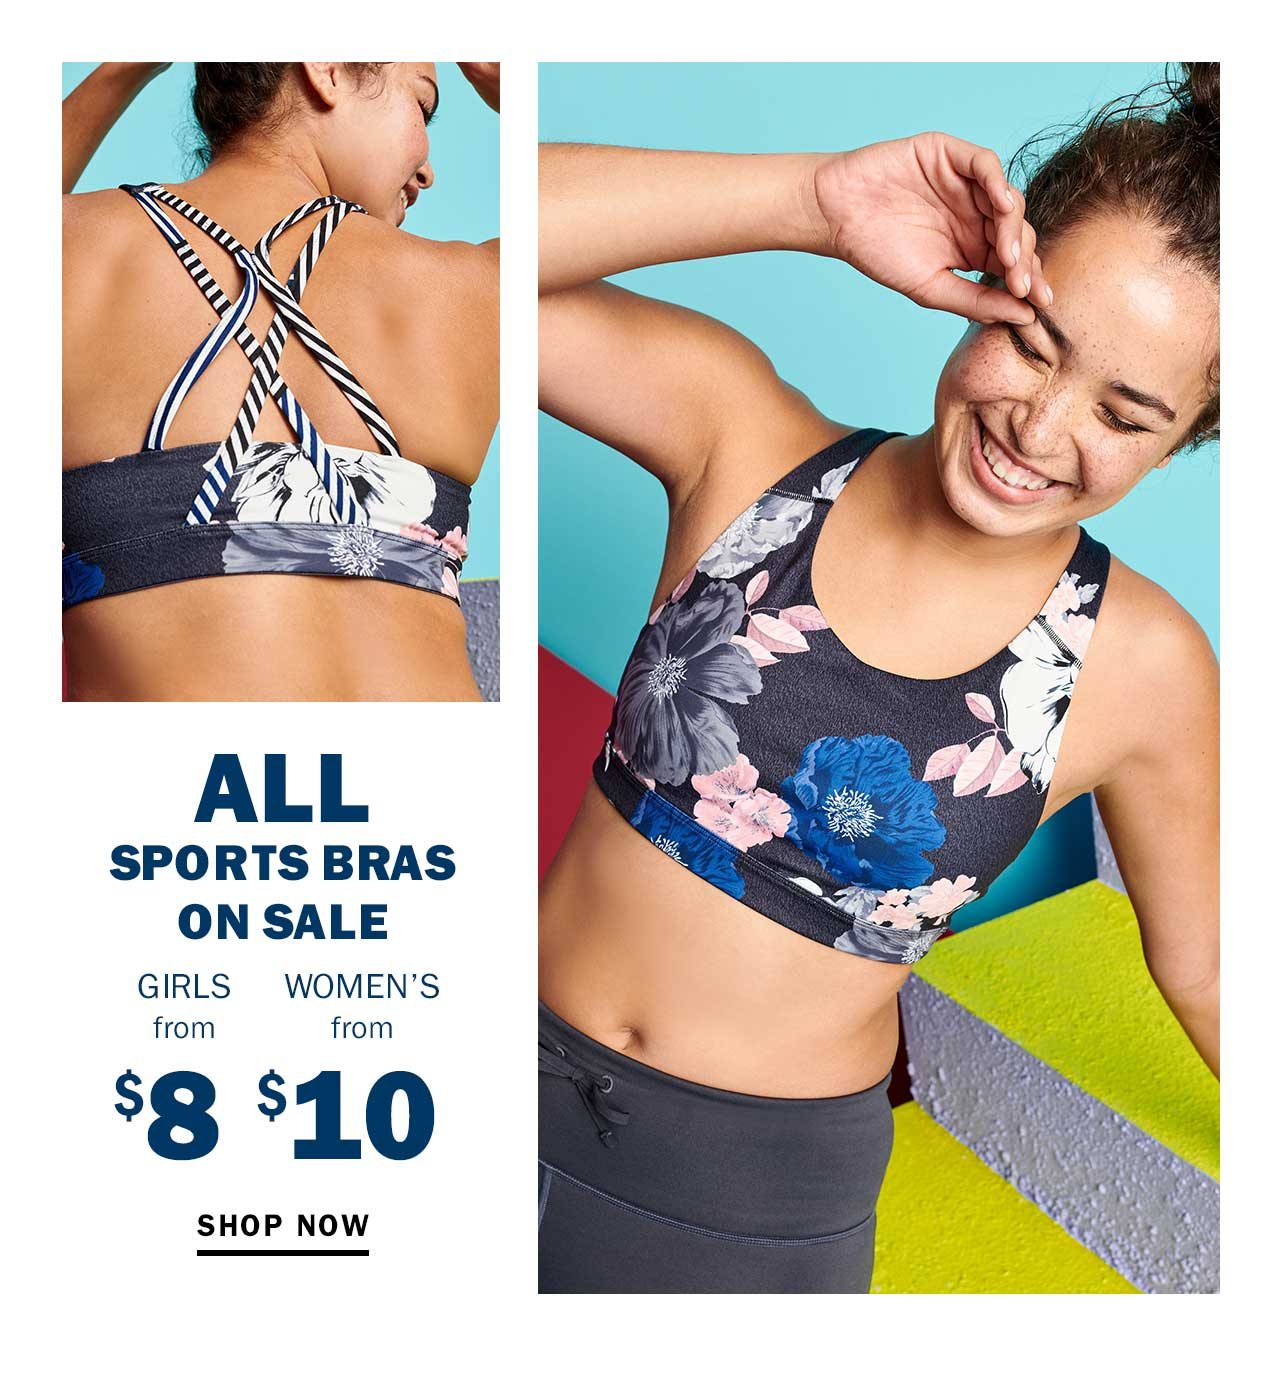 All sports bras on sale